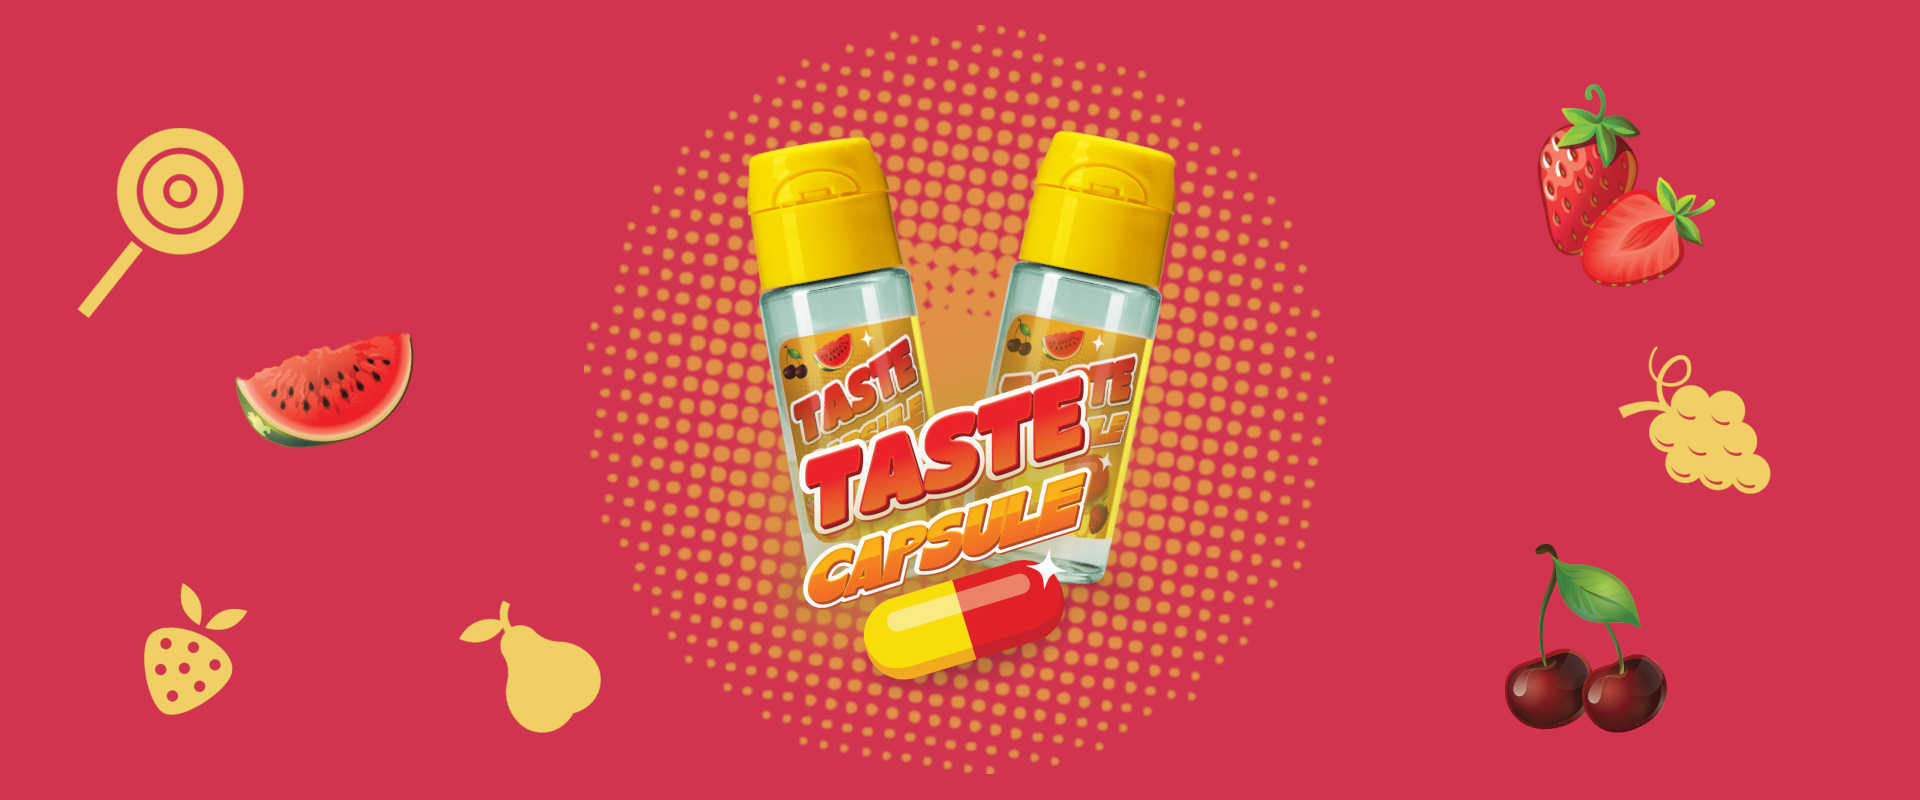 taste-capsule-promo-1920X800